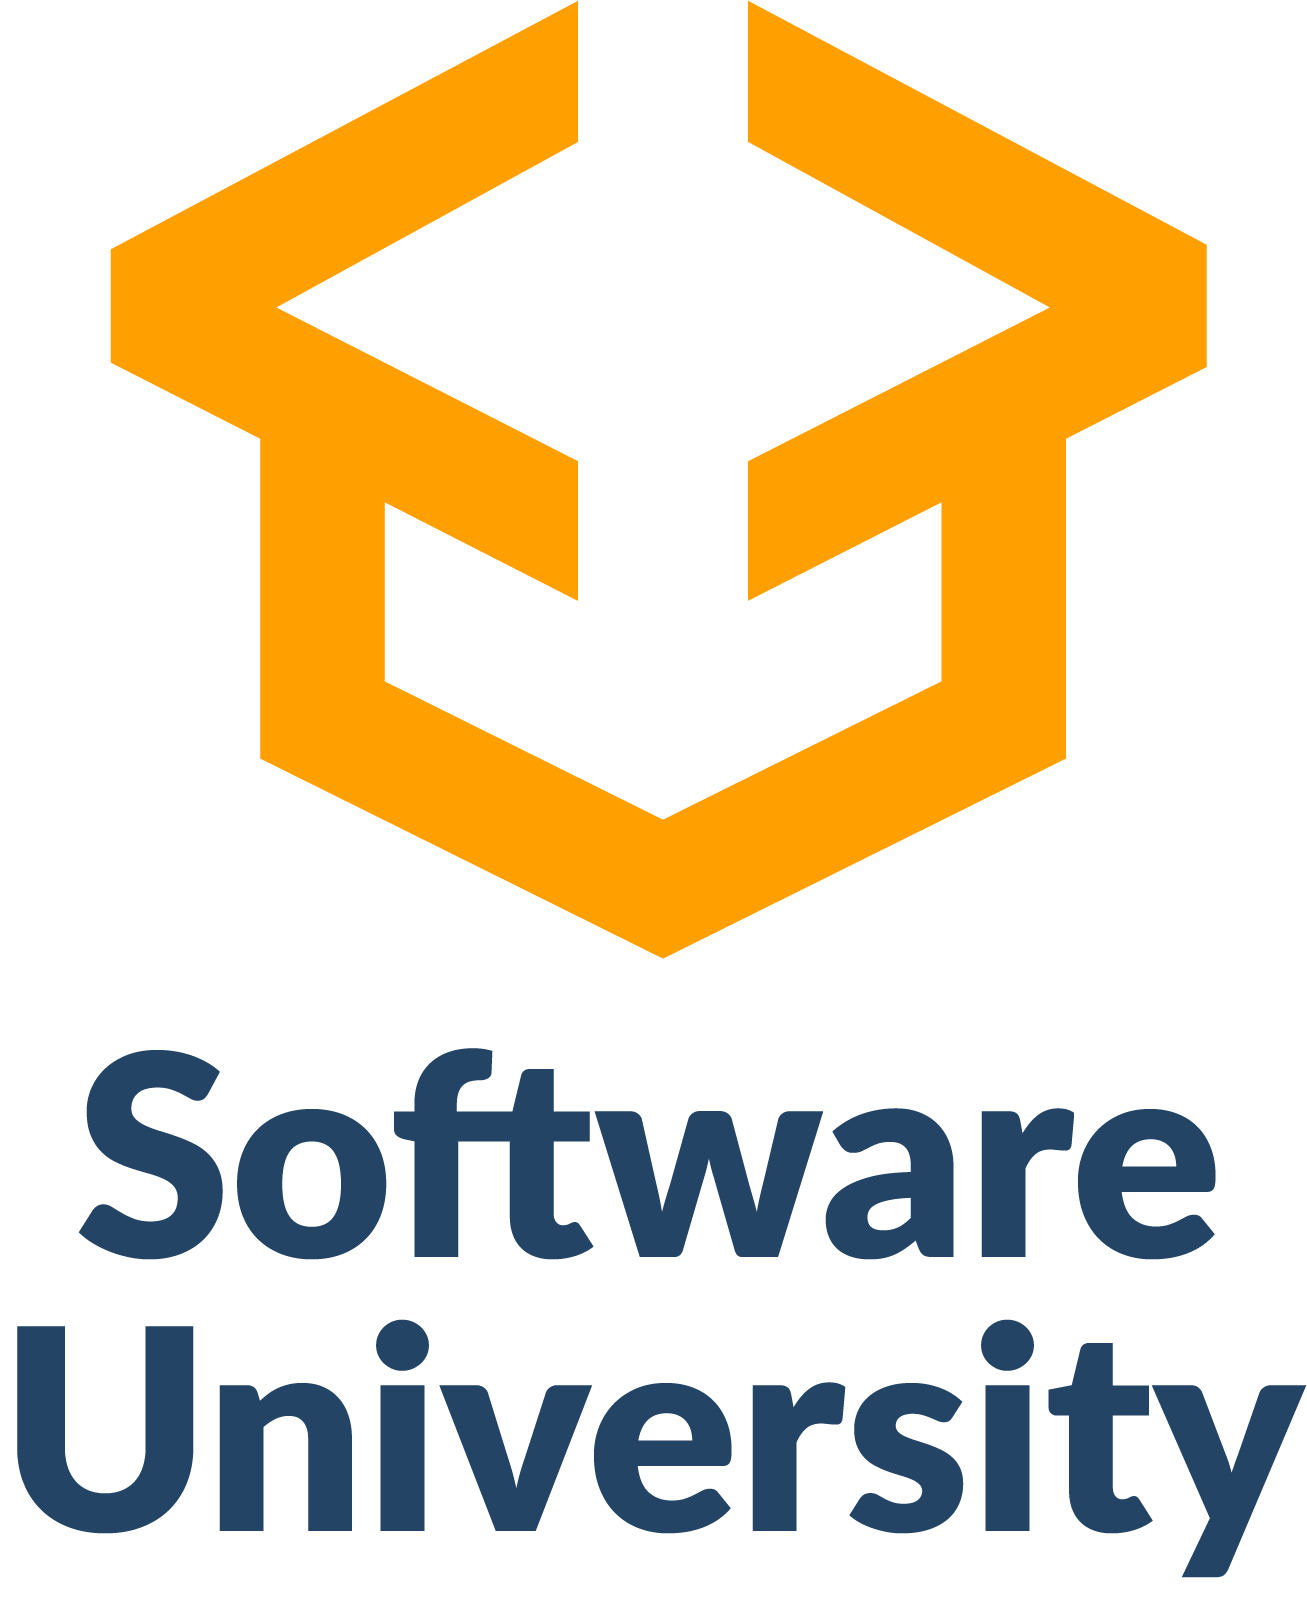 Software University